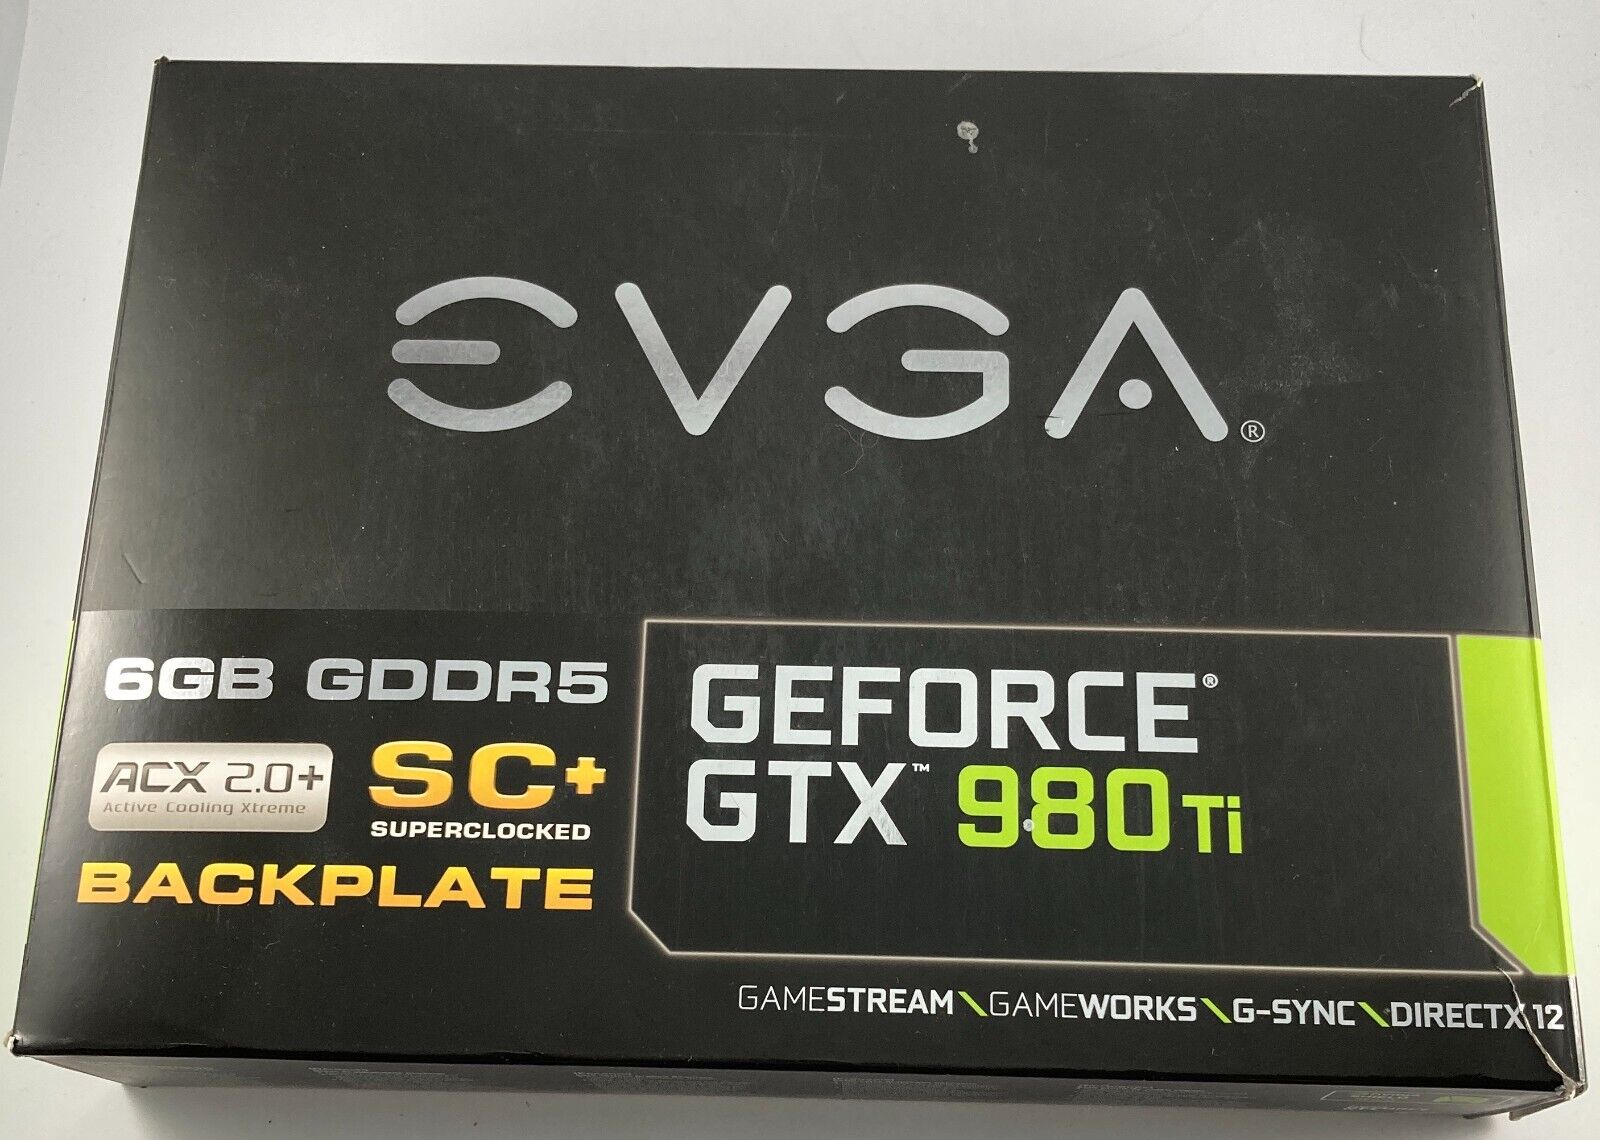 EVGA GeForce GTX 980 Ti Graphics Card 6GB GDDR5 SC+ w Backplate Open Box